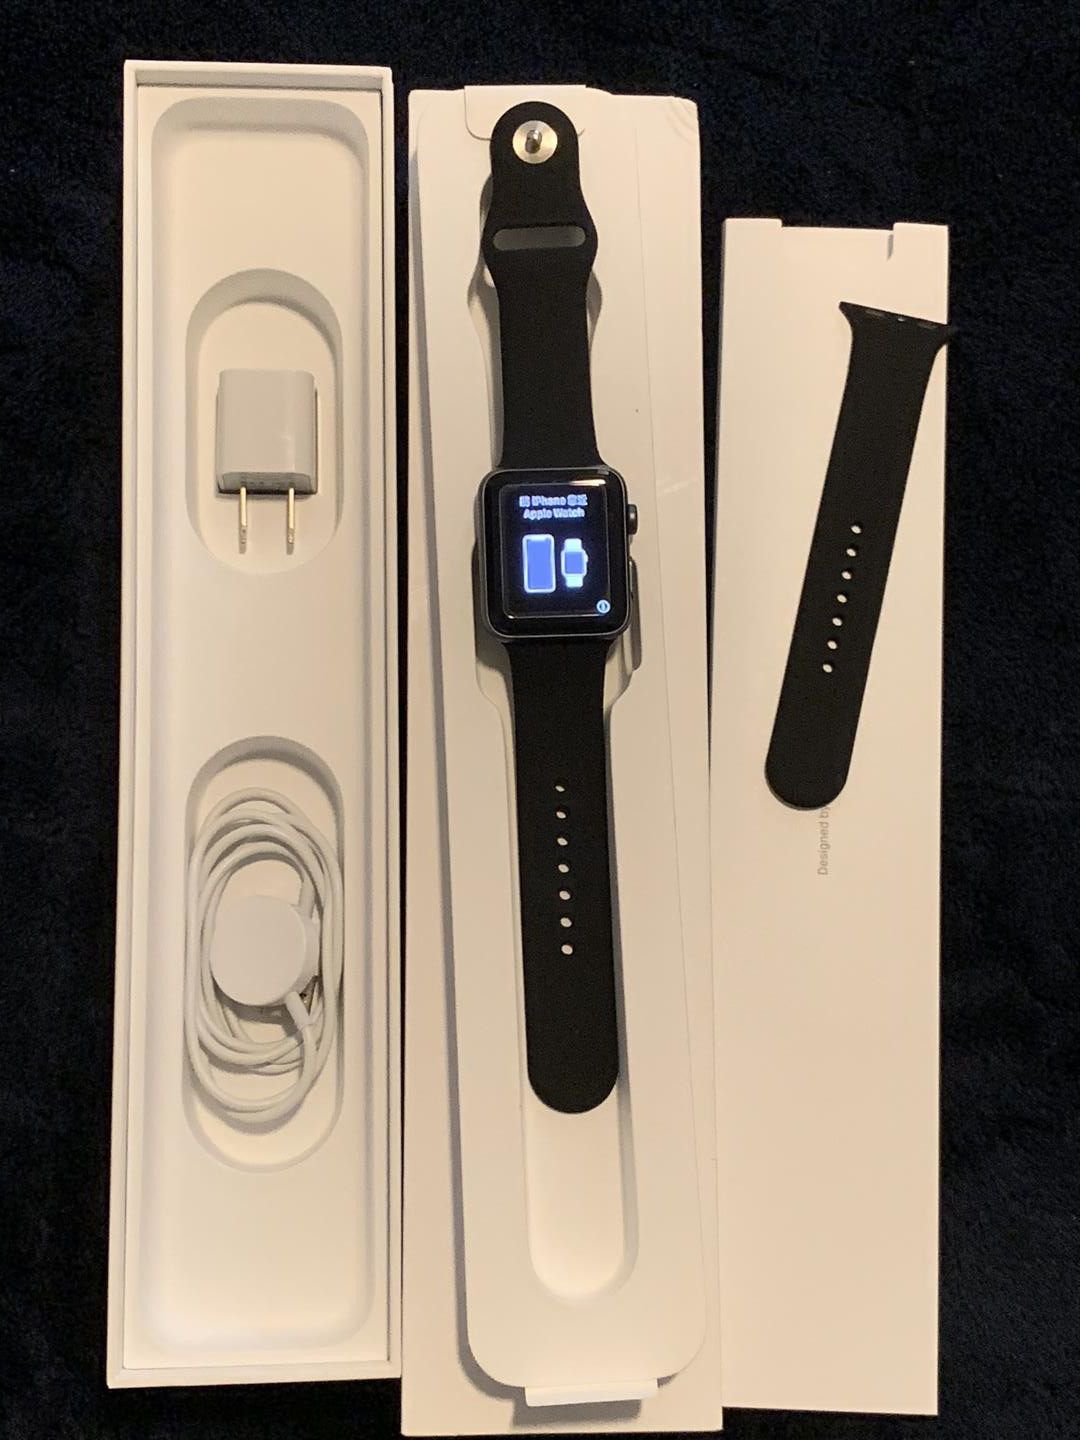 Apple Watch Series 3 42mm Nike Gps Cellular Unlocked Space gray aluminum /w Black band & box